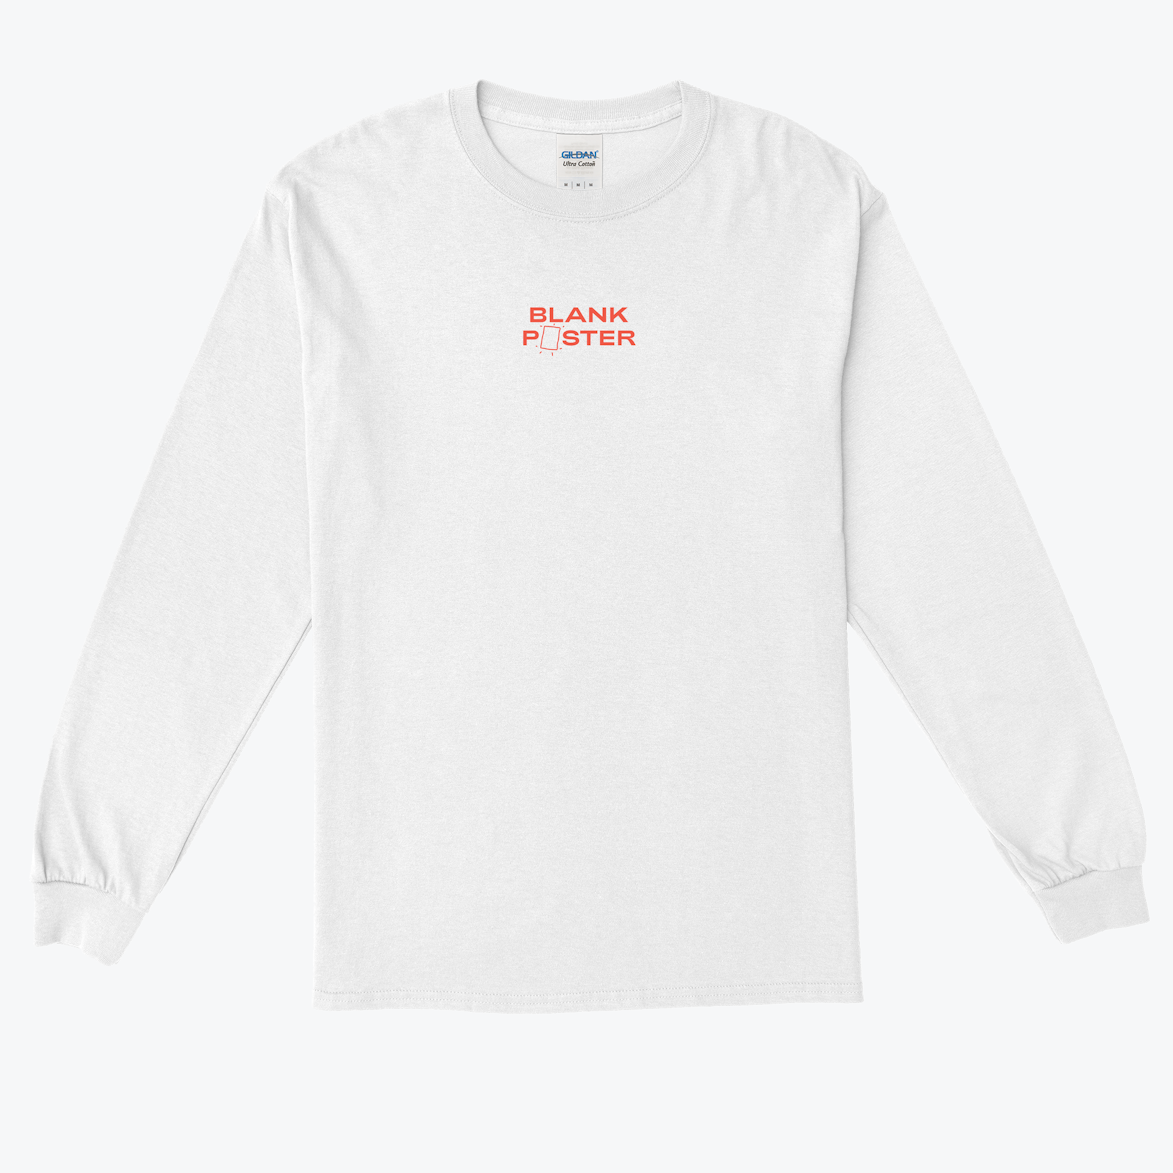 Blank Essentials T-Shirt – White – BLANK ARCHIVE